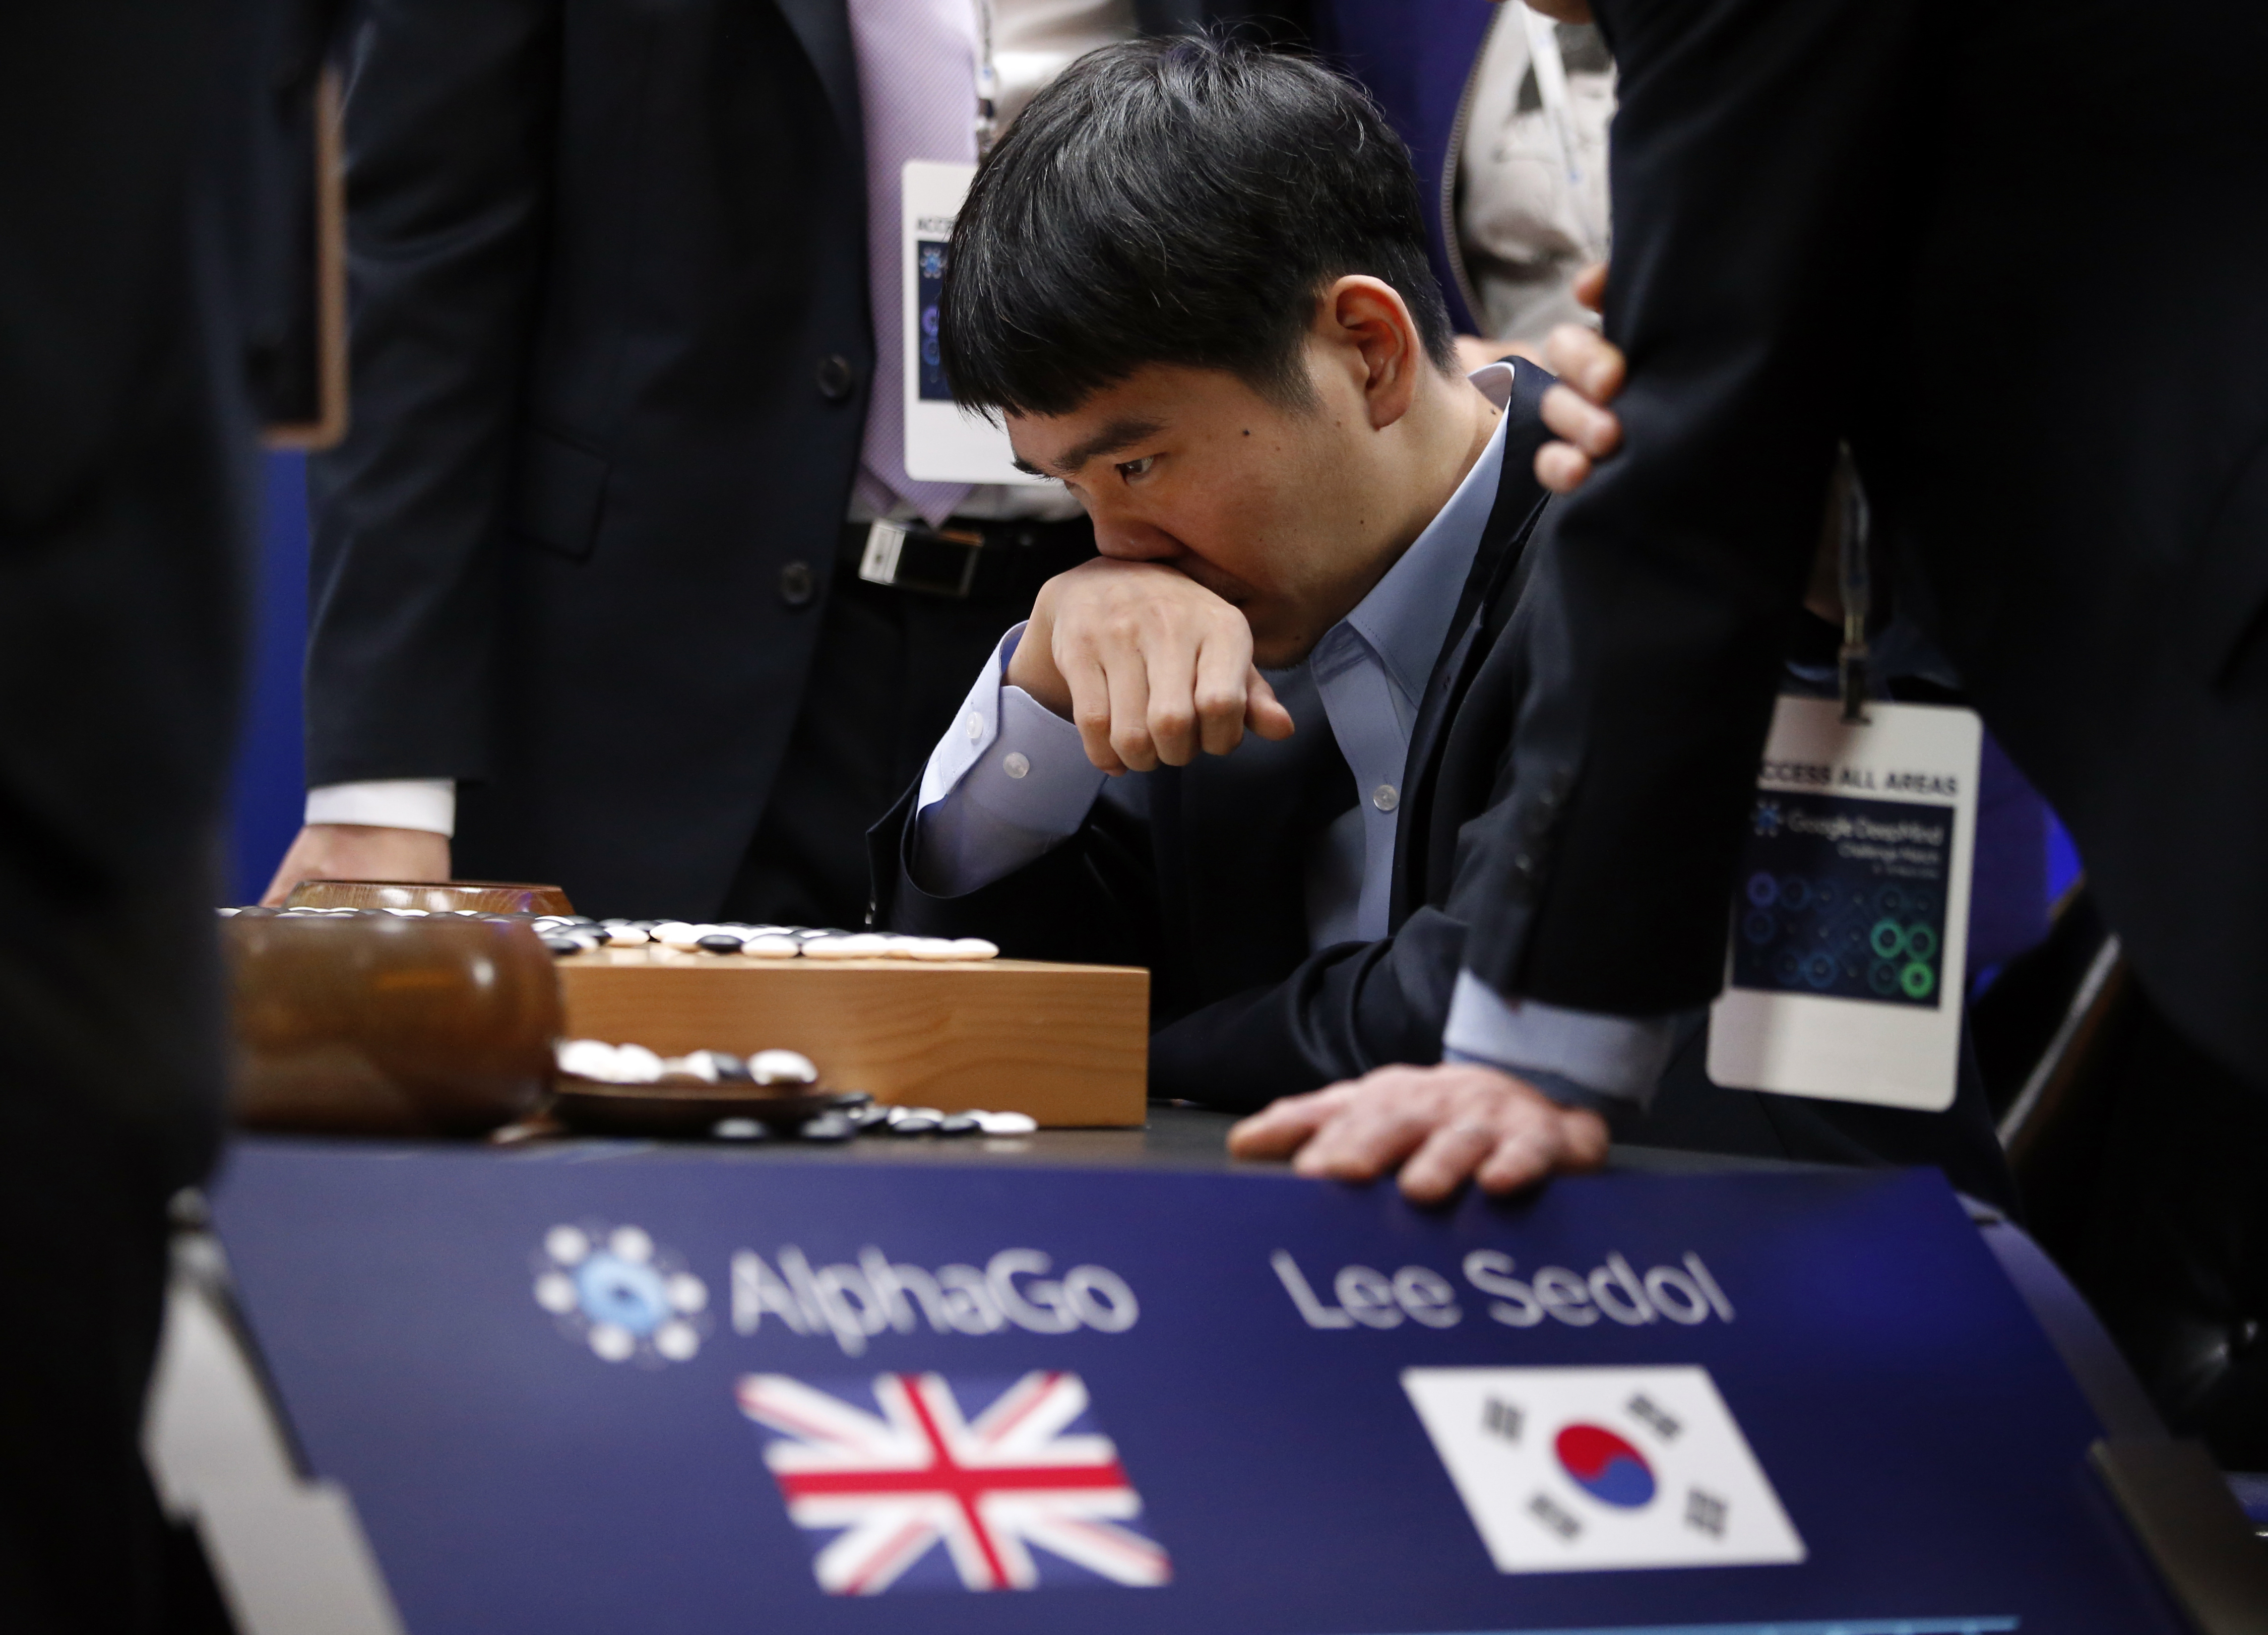 South Korean professional Go player Lee Sedol